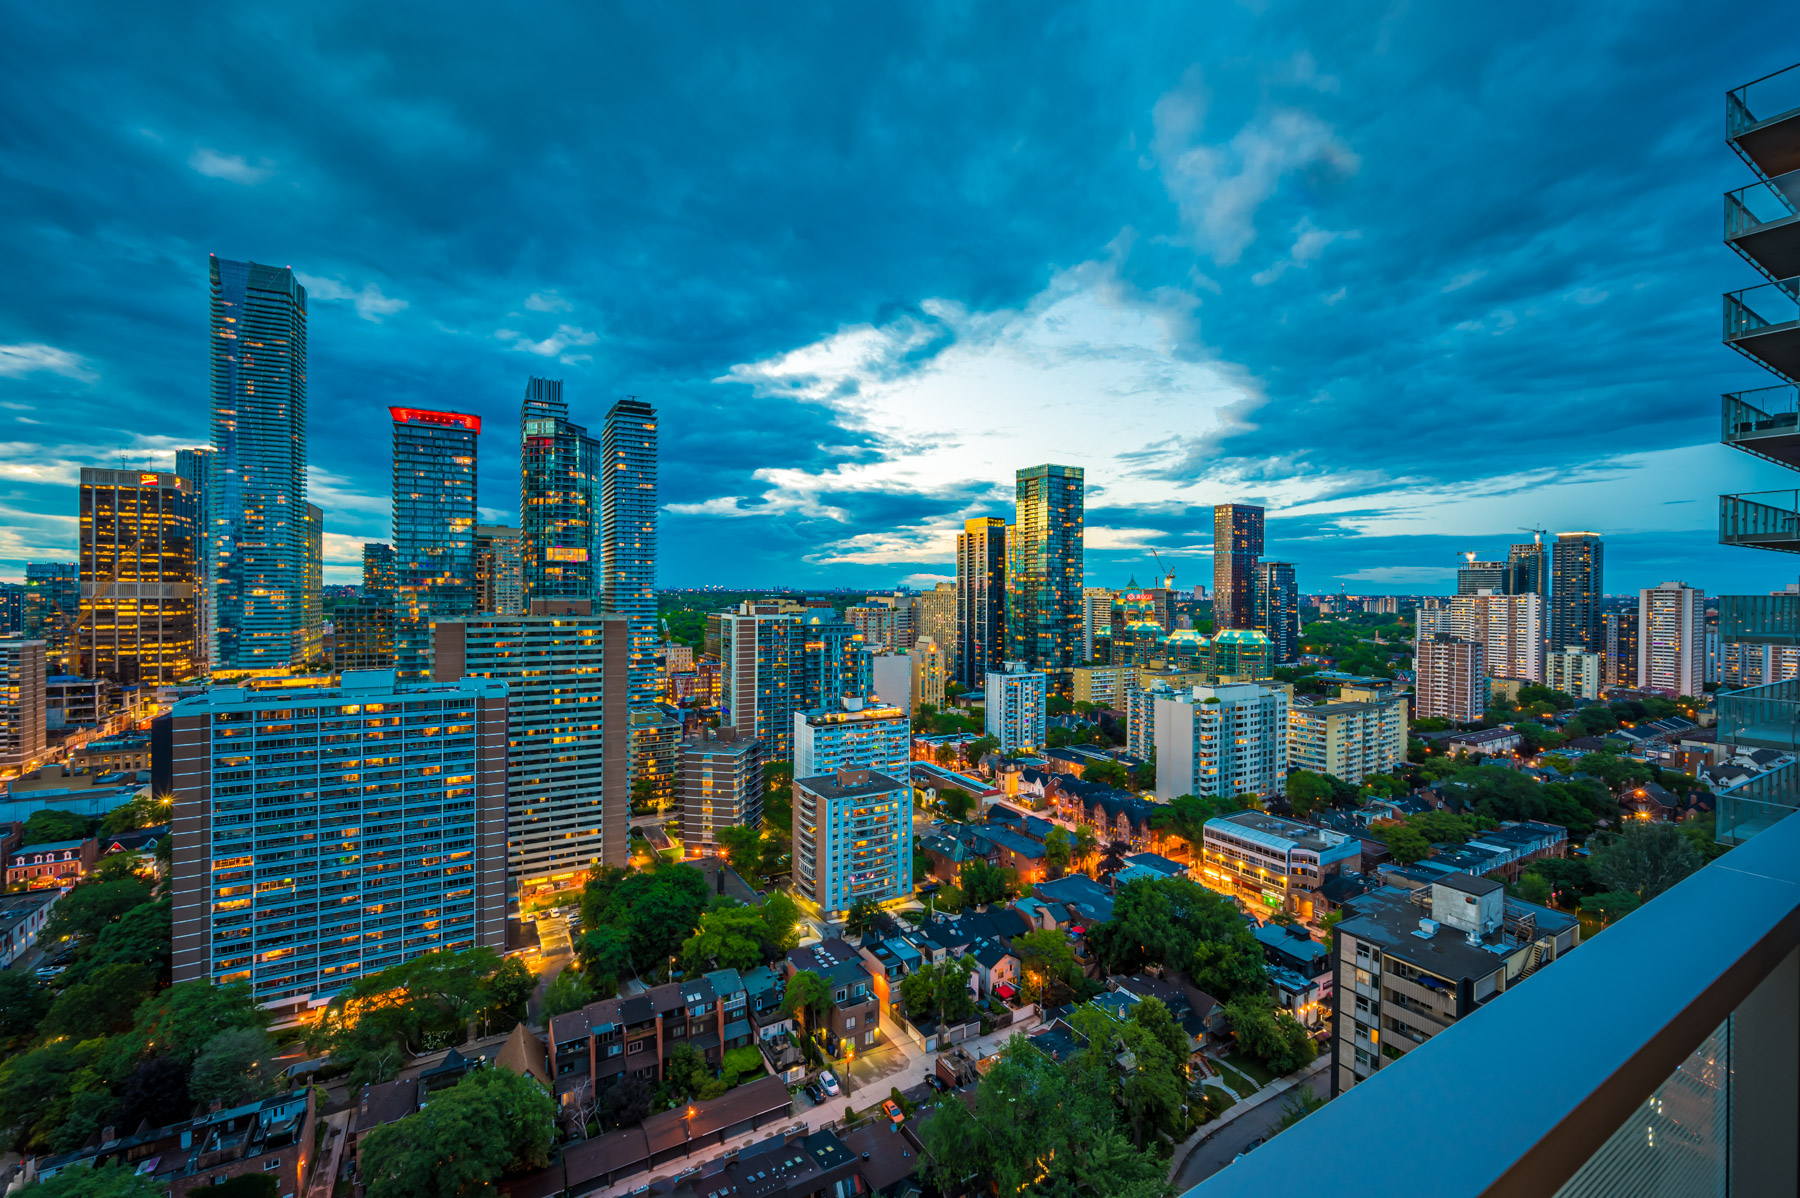 Toronto skyline at night from 28 Wellesley St Unit 3009 balcony.